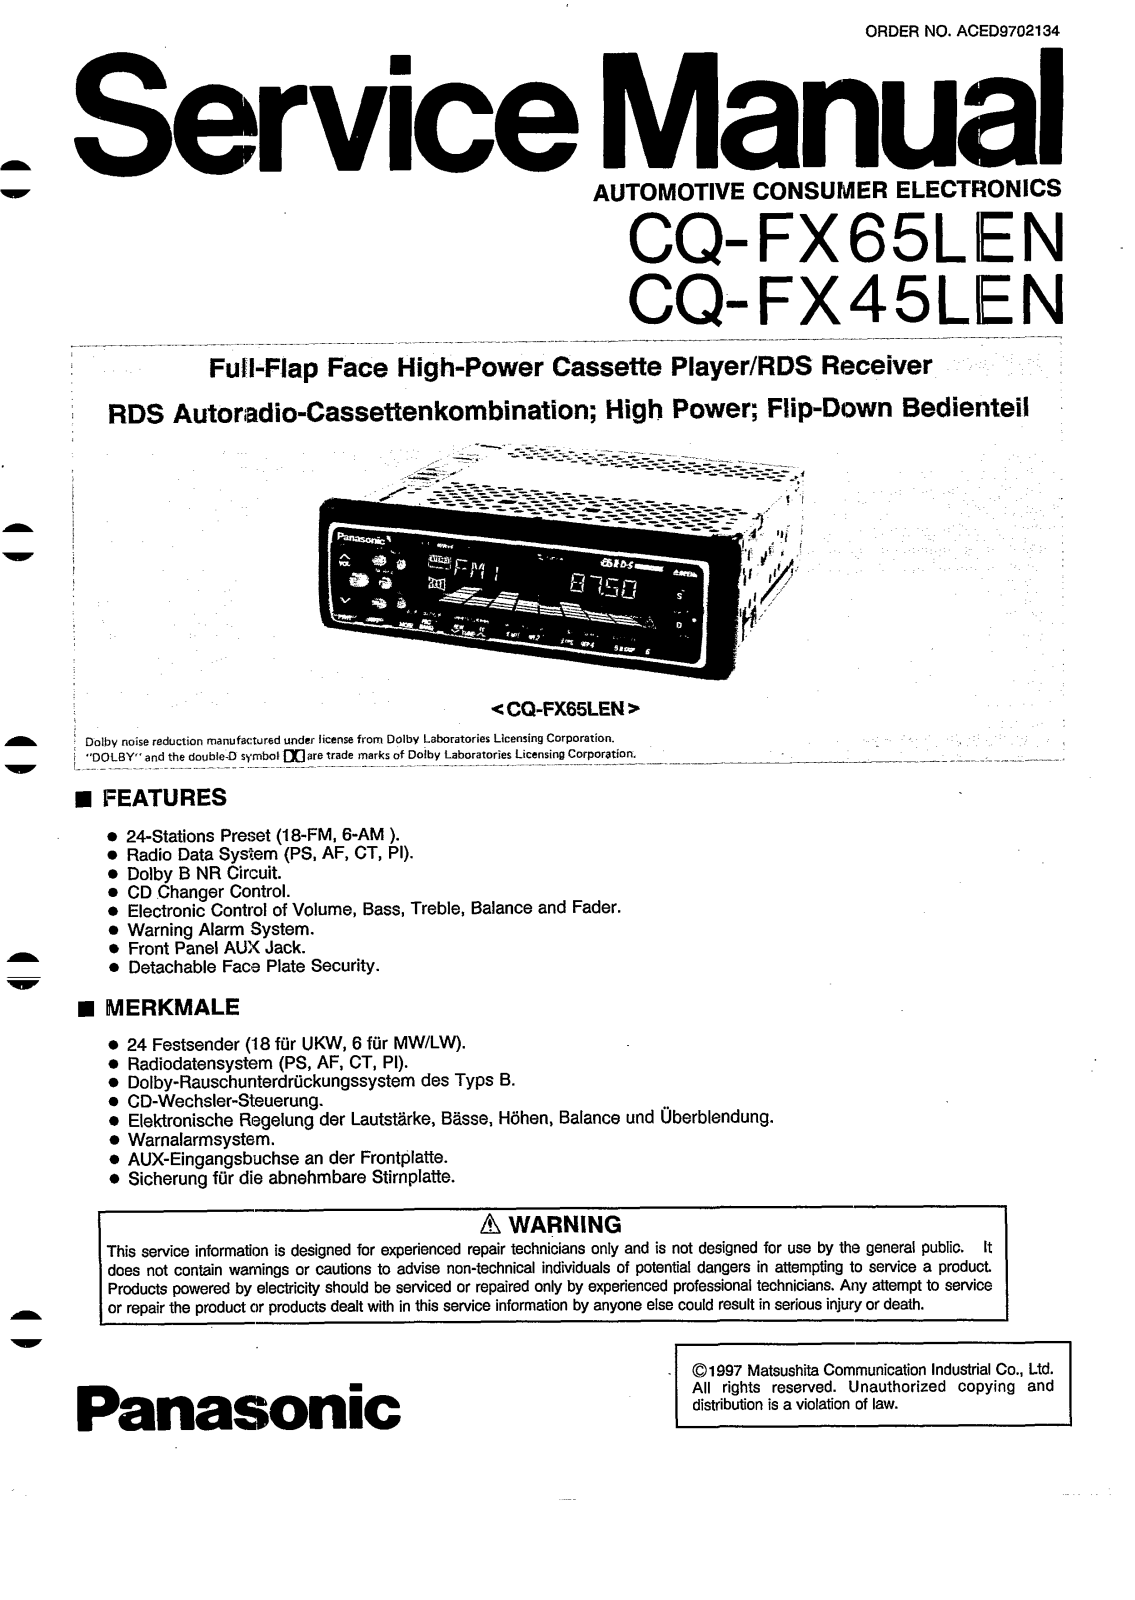 Panasonic CQ-FX65LEN Service Manual